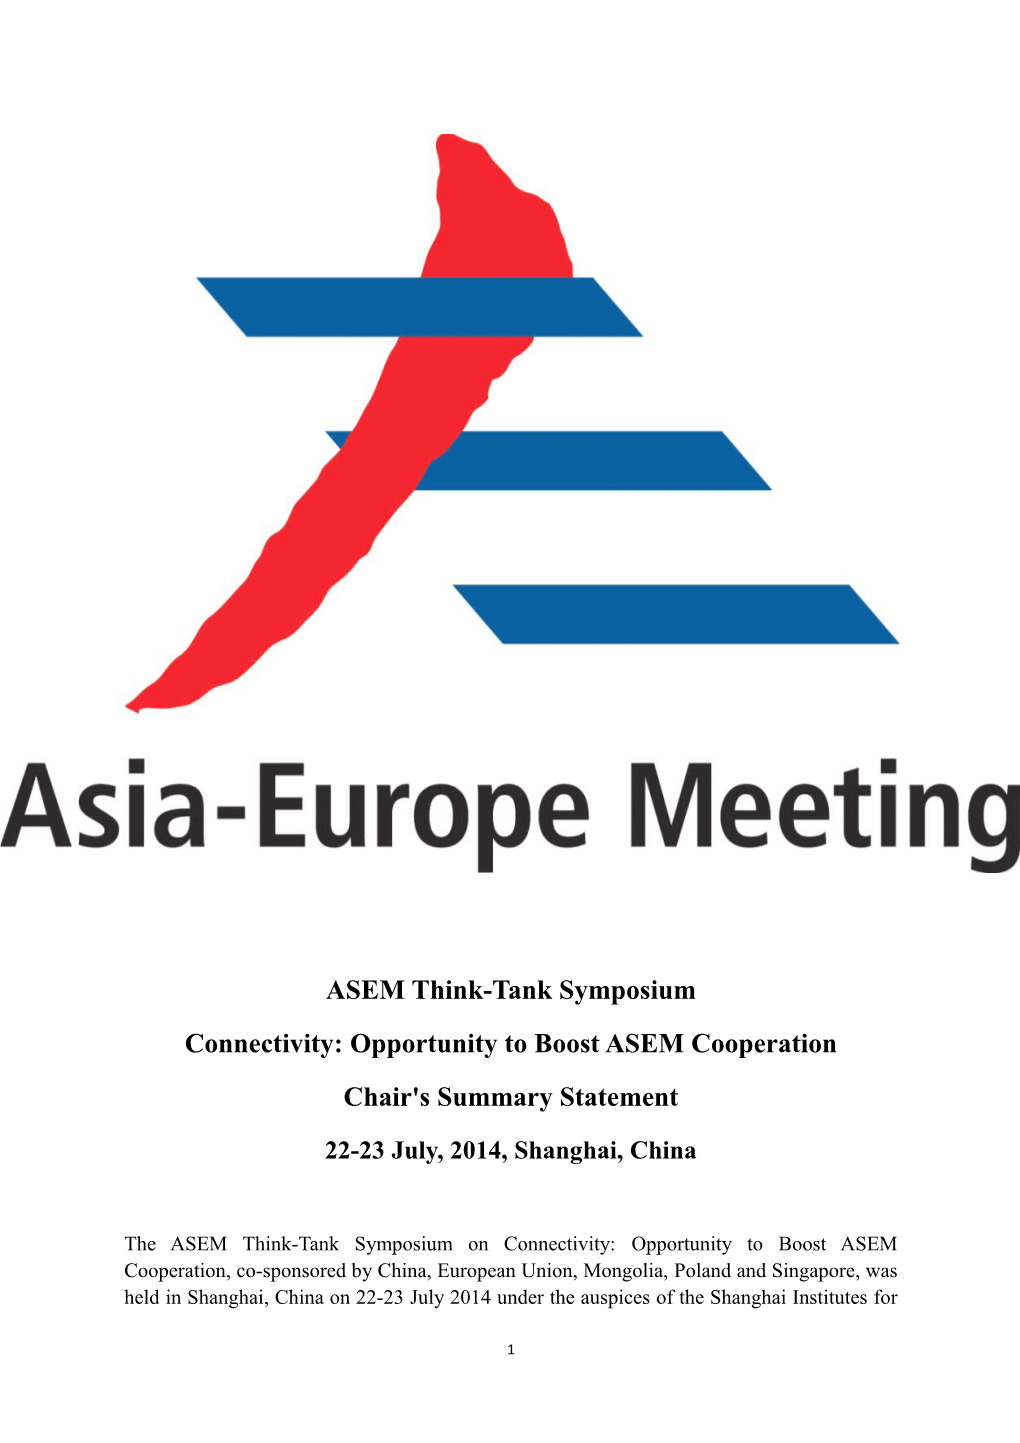 ASEM Think-Tank Symposium